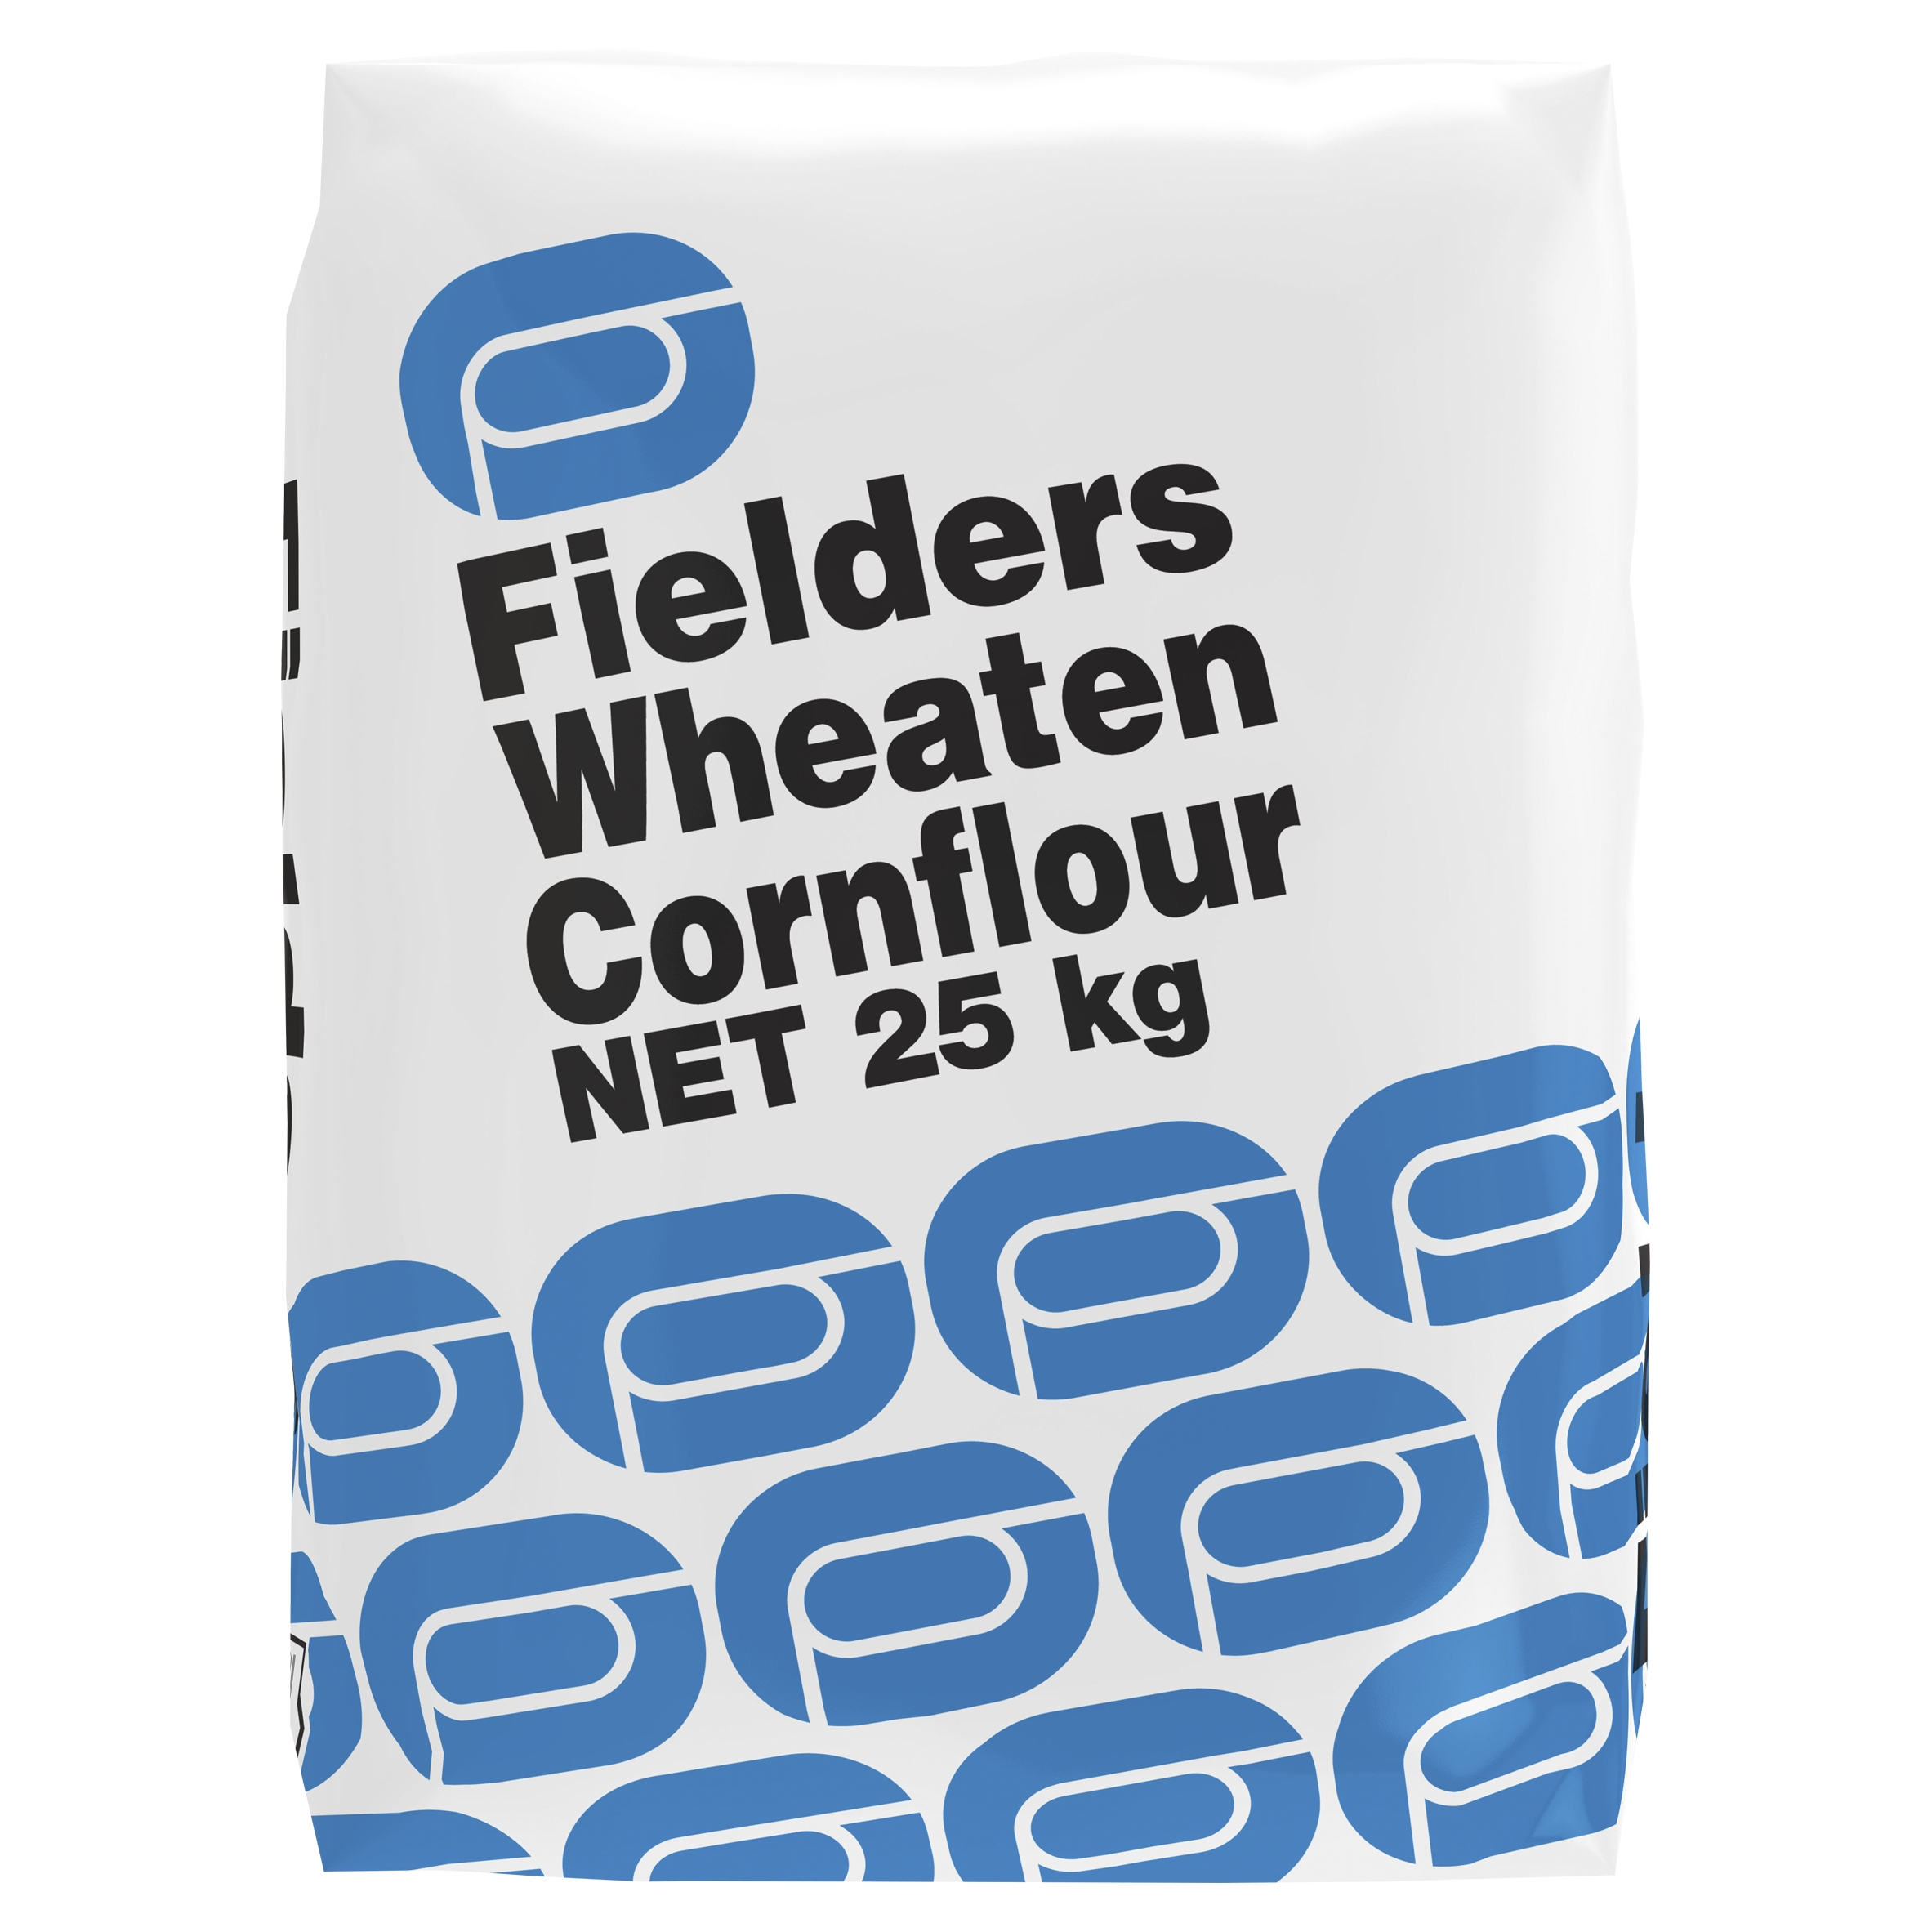 Fielders Wheaten Cornflour 25kg product photo